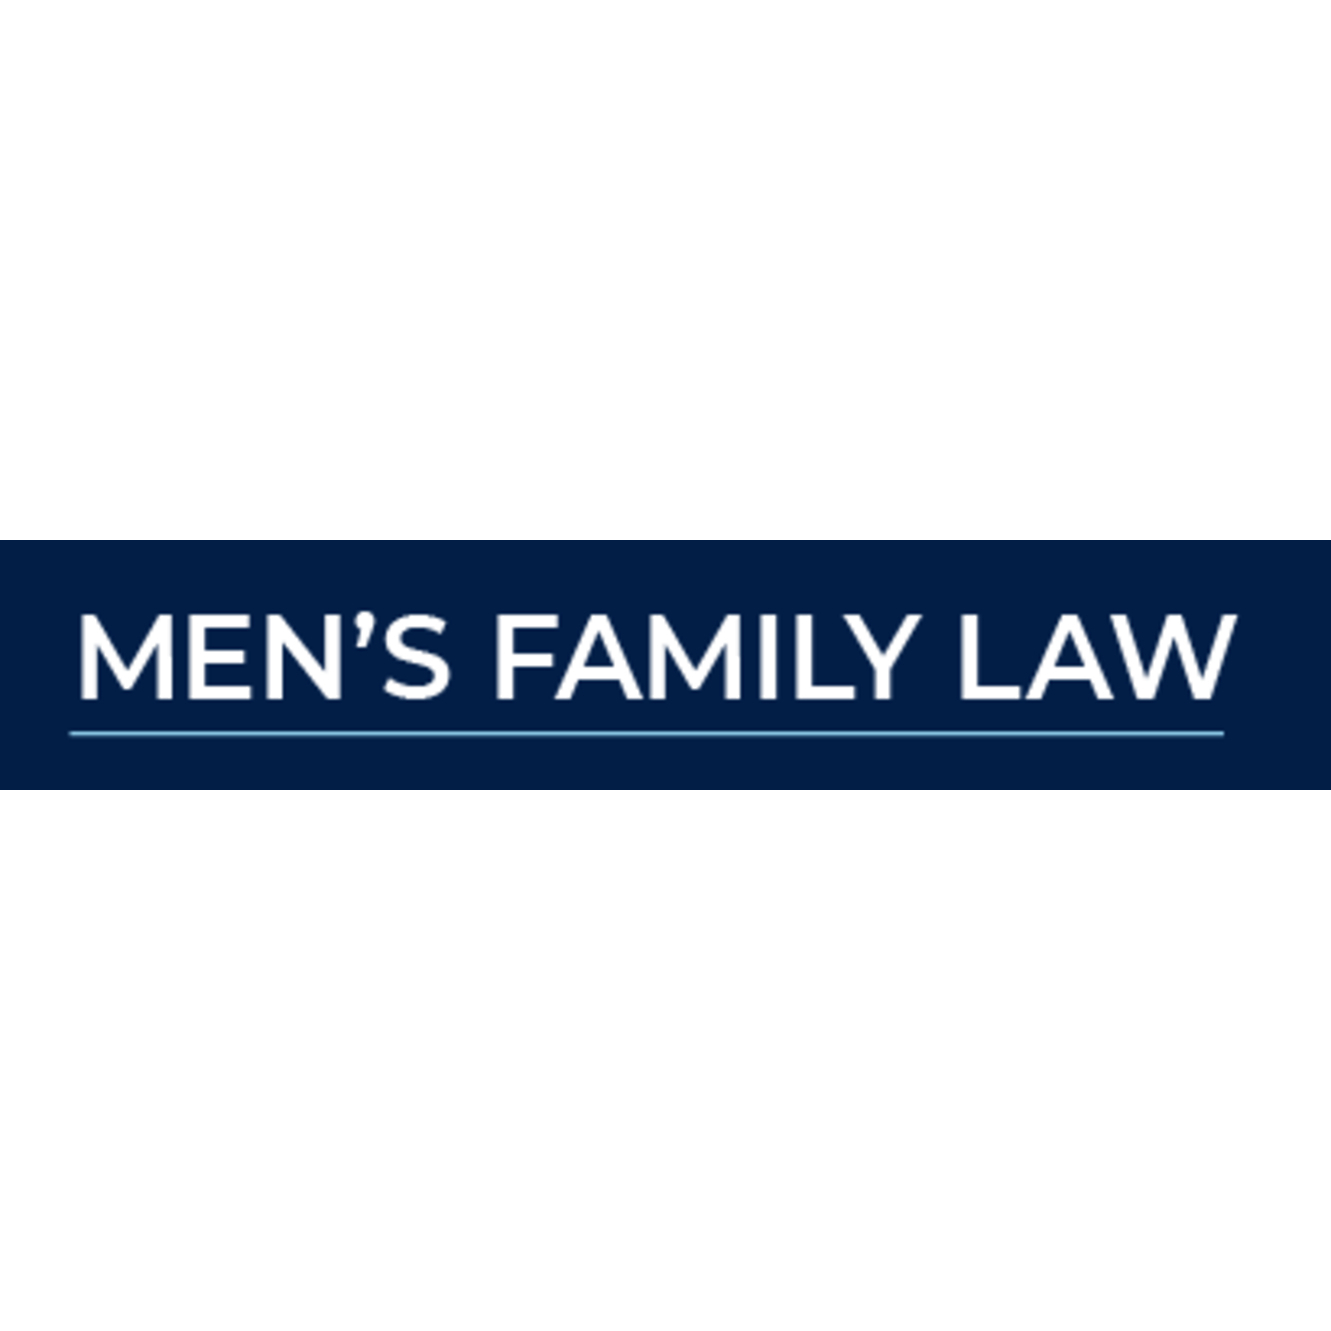 Men's Family Law - Santa Monica, CA 90405 - (310)664-9969 | ShowMeLocal.com